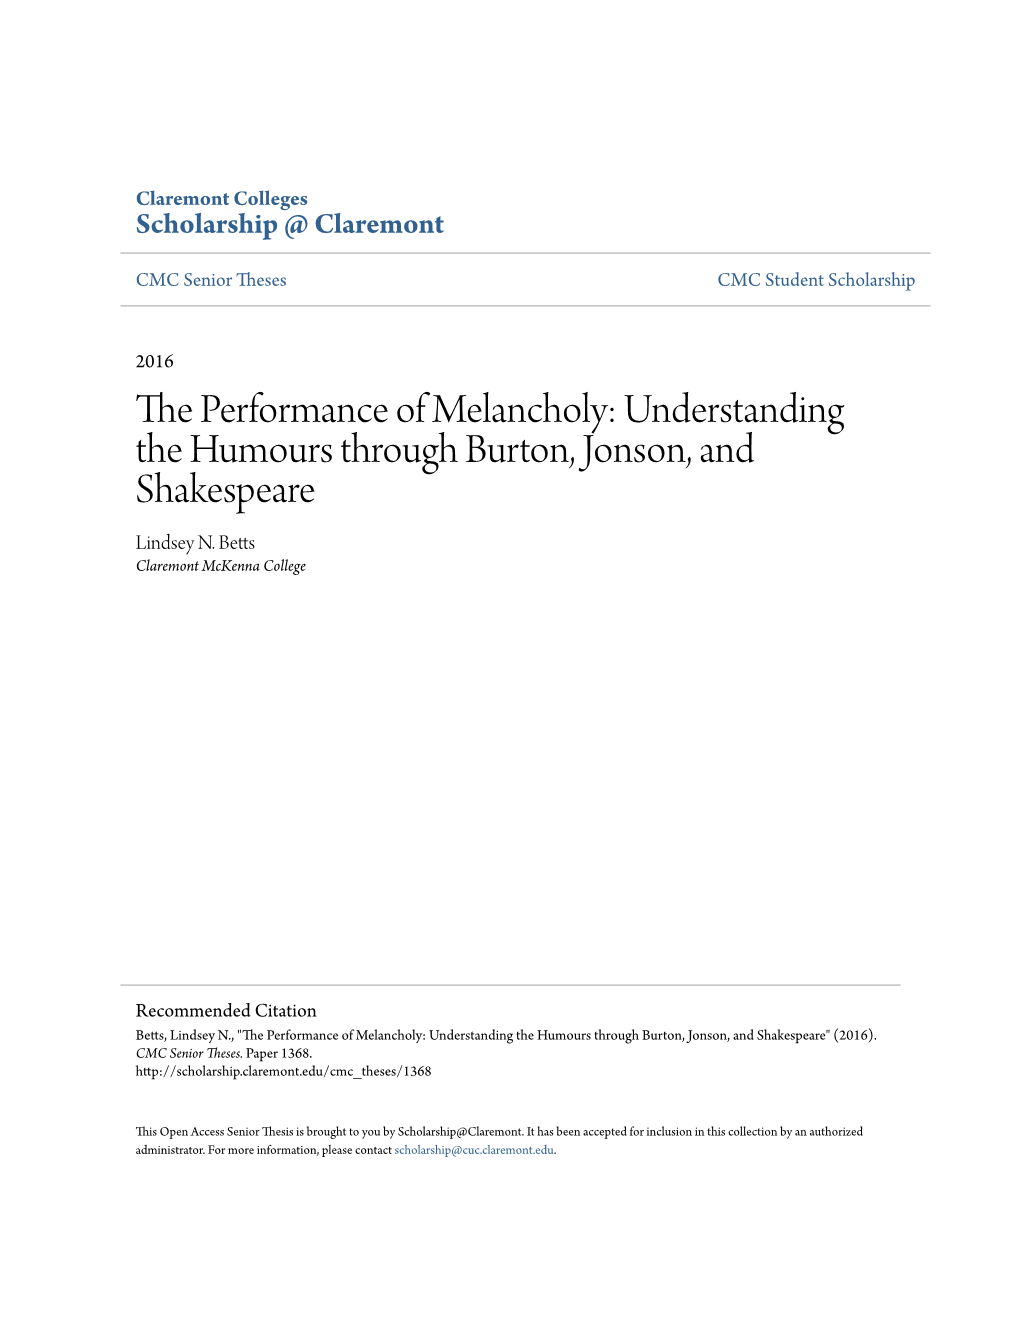 Understanding the Humours Through Burton, Jonson, and Shakespeare Lindsey N